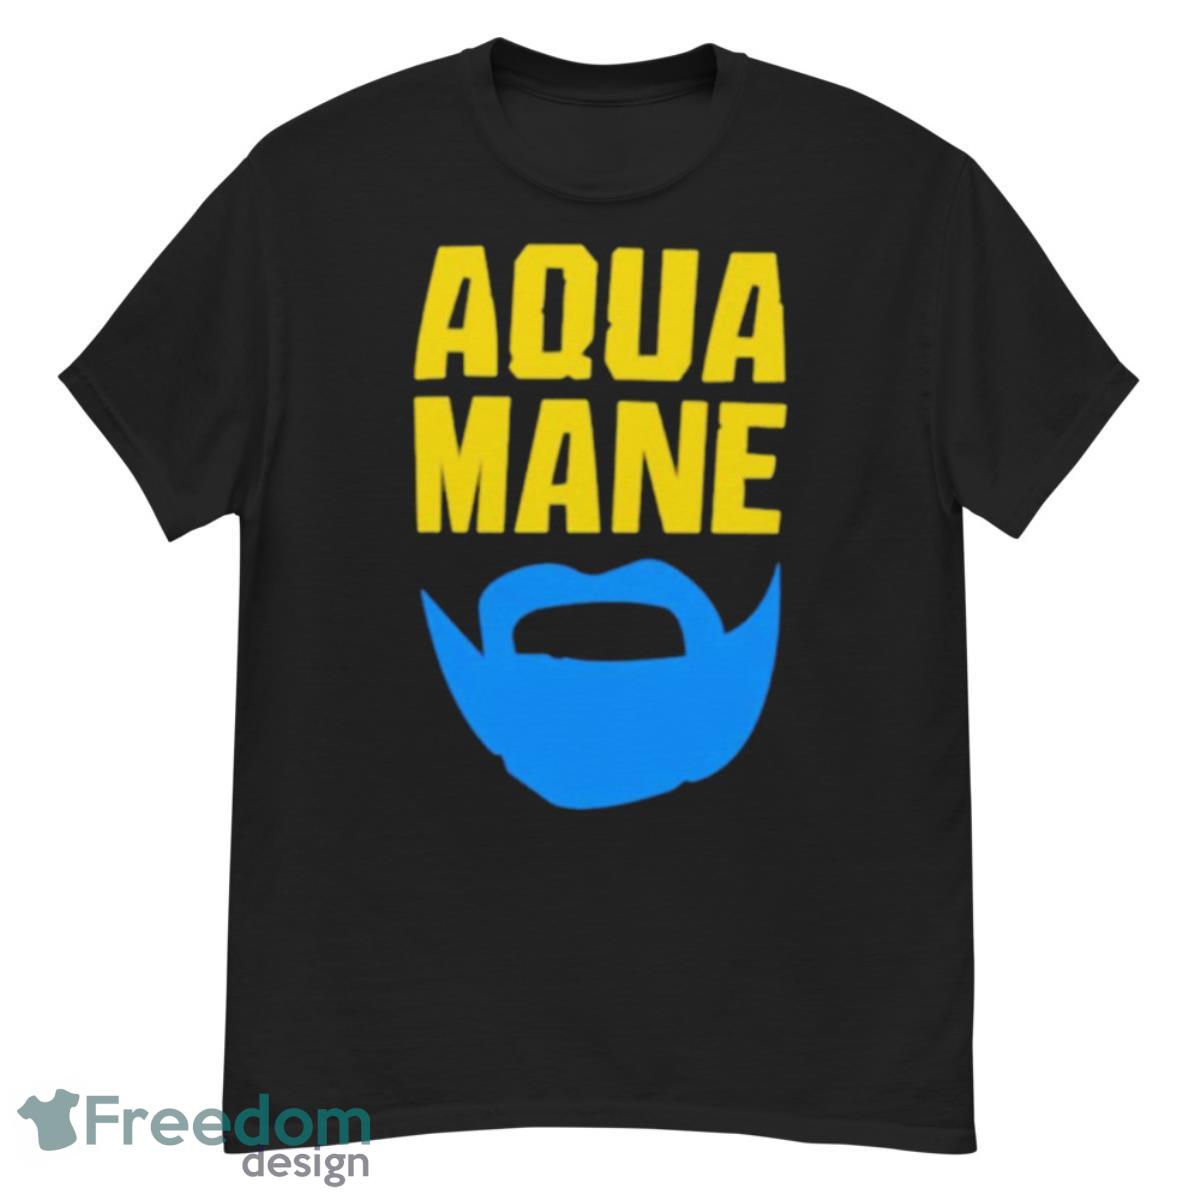 Aqua mane shirt - G500 Men’s Classic T-Shirt